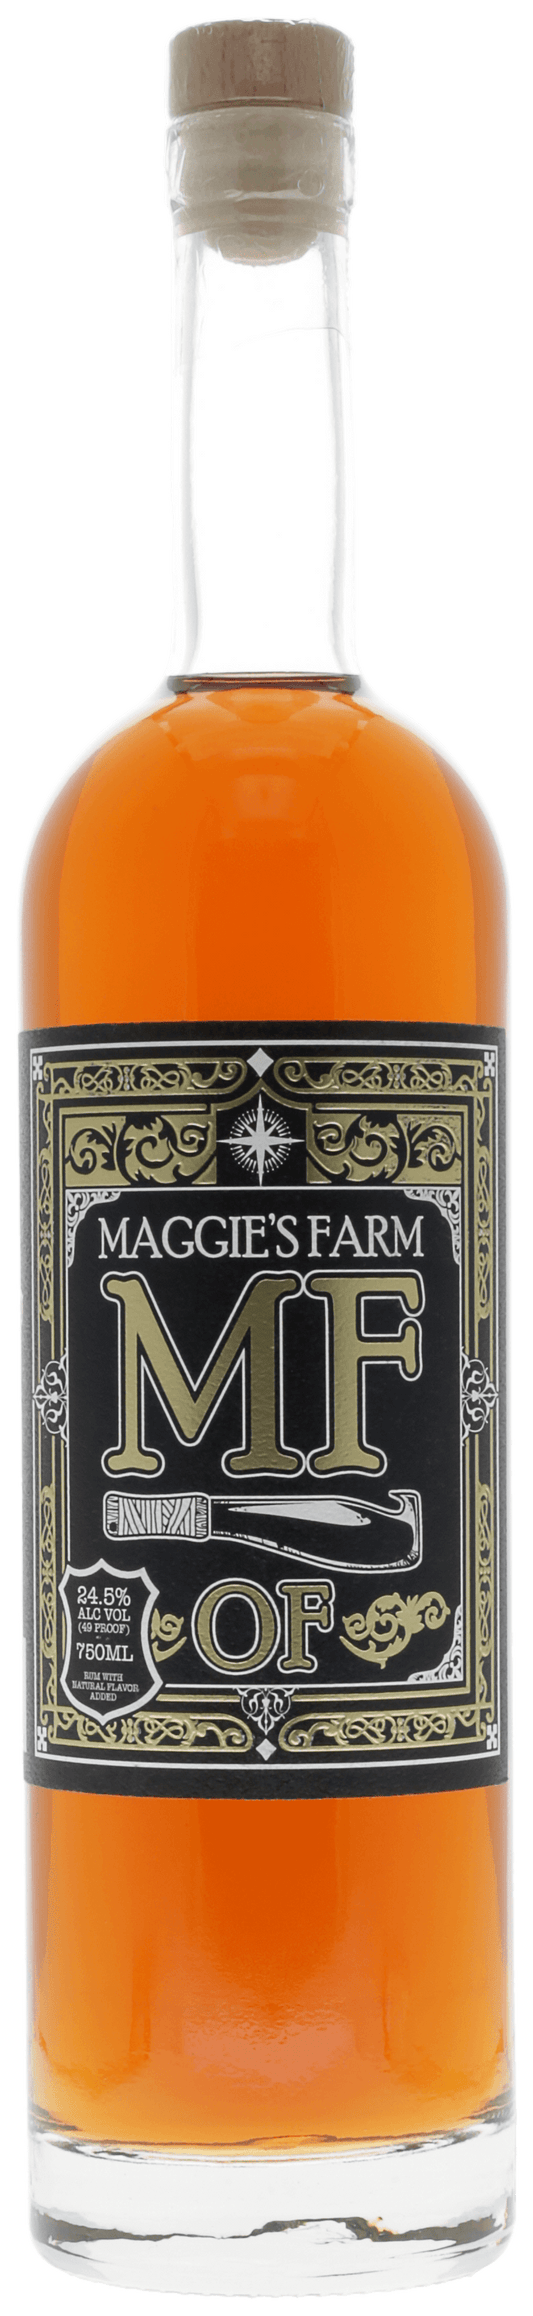 Maggie's Farm MFOF